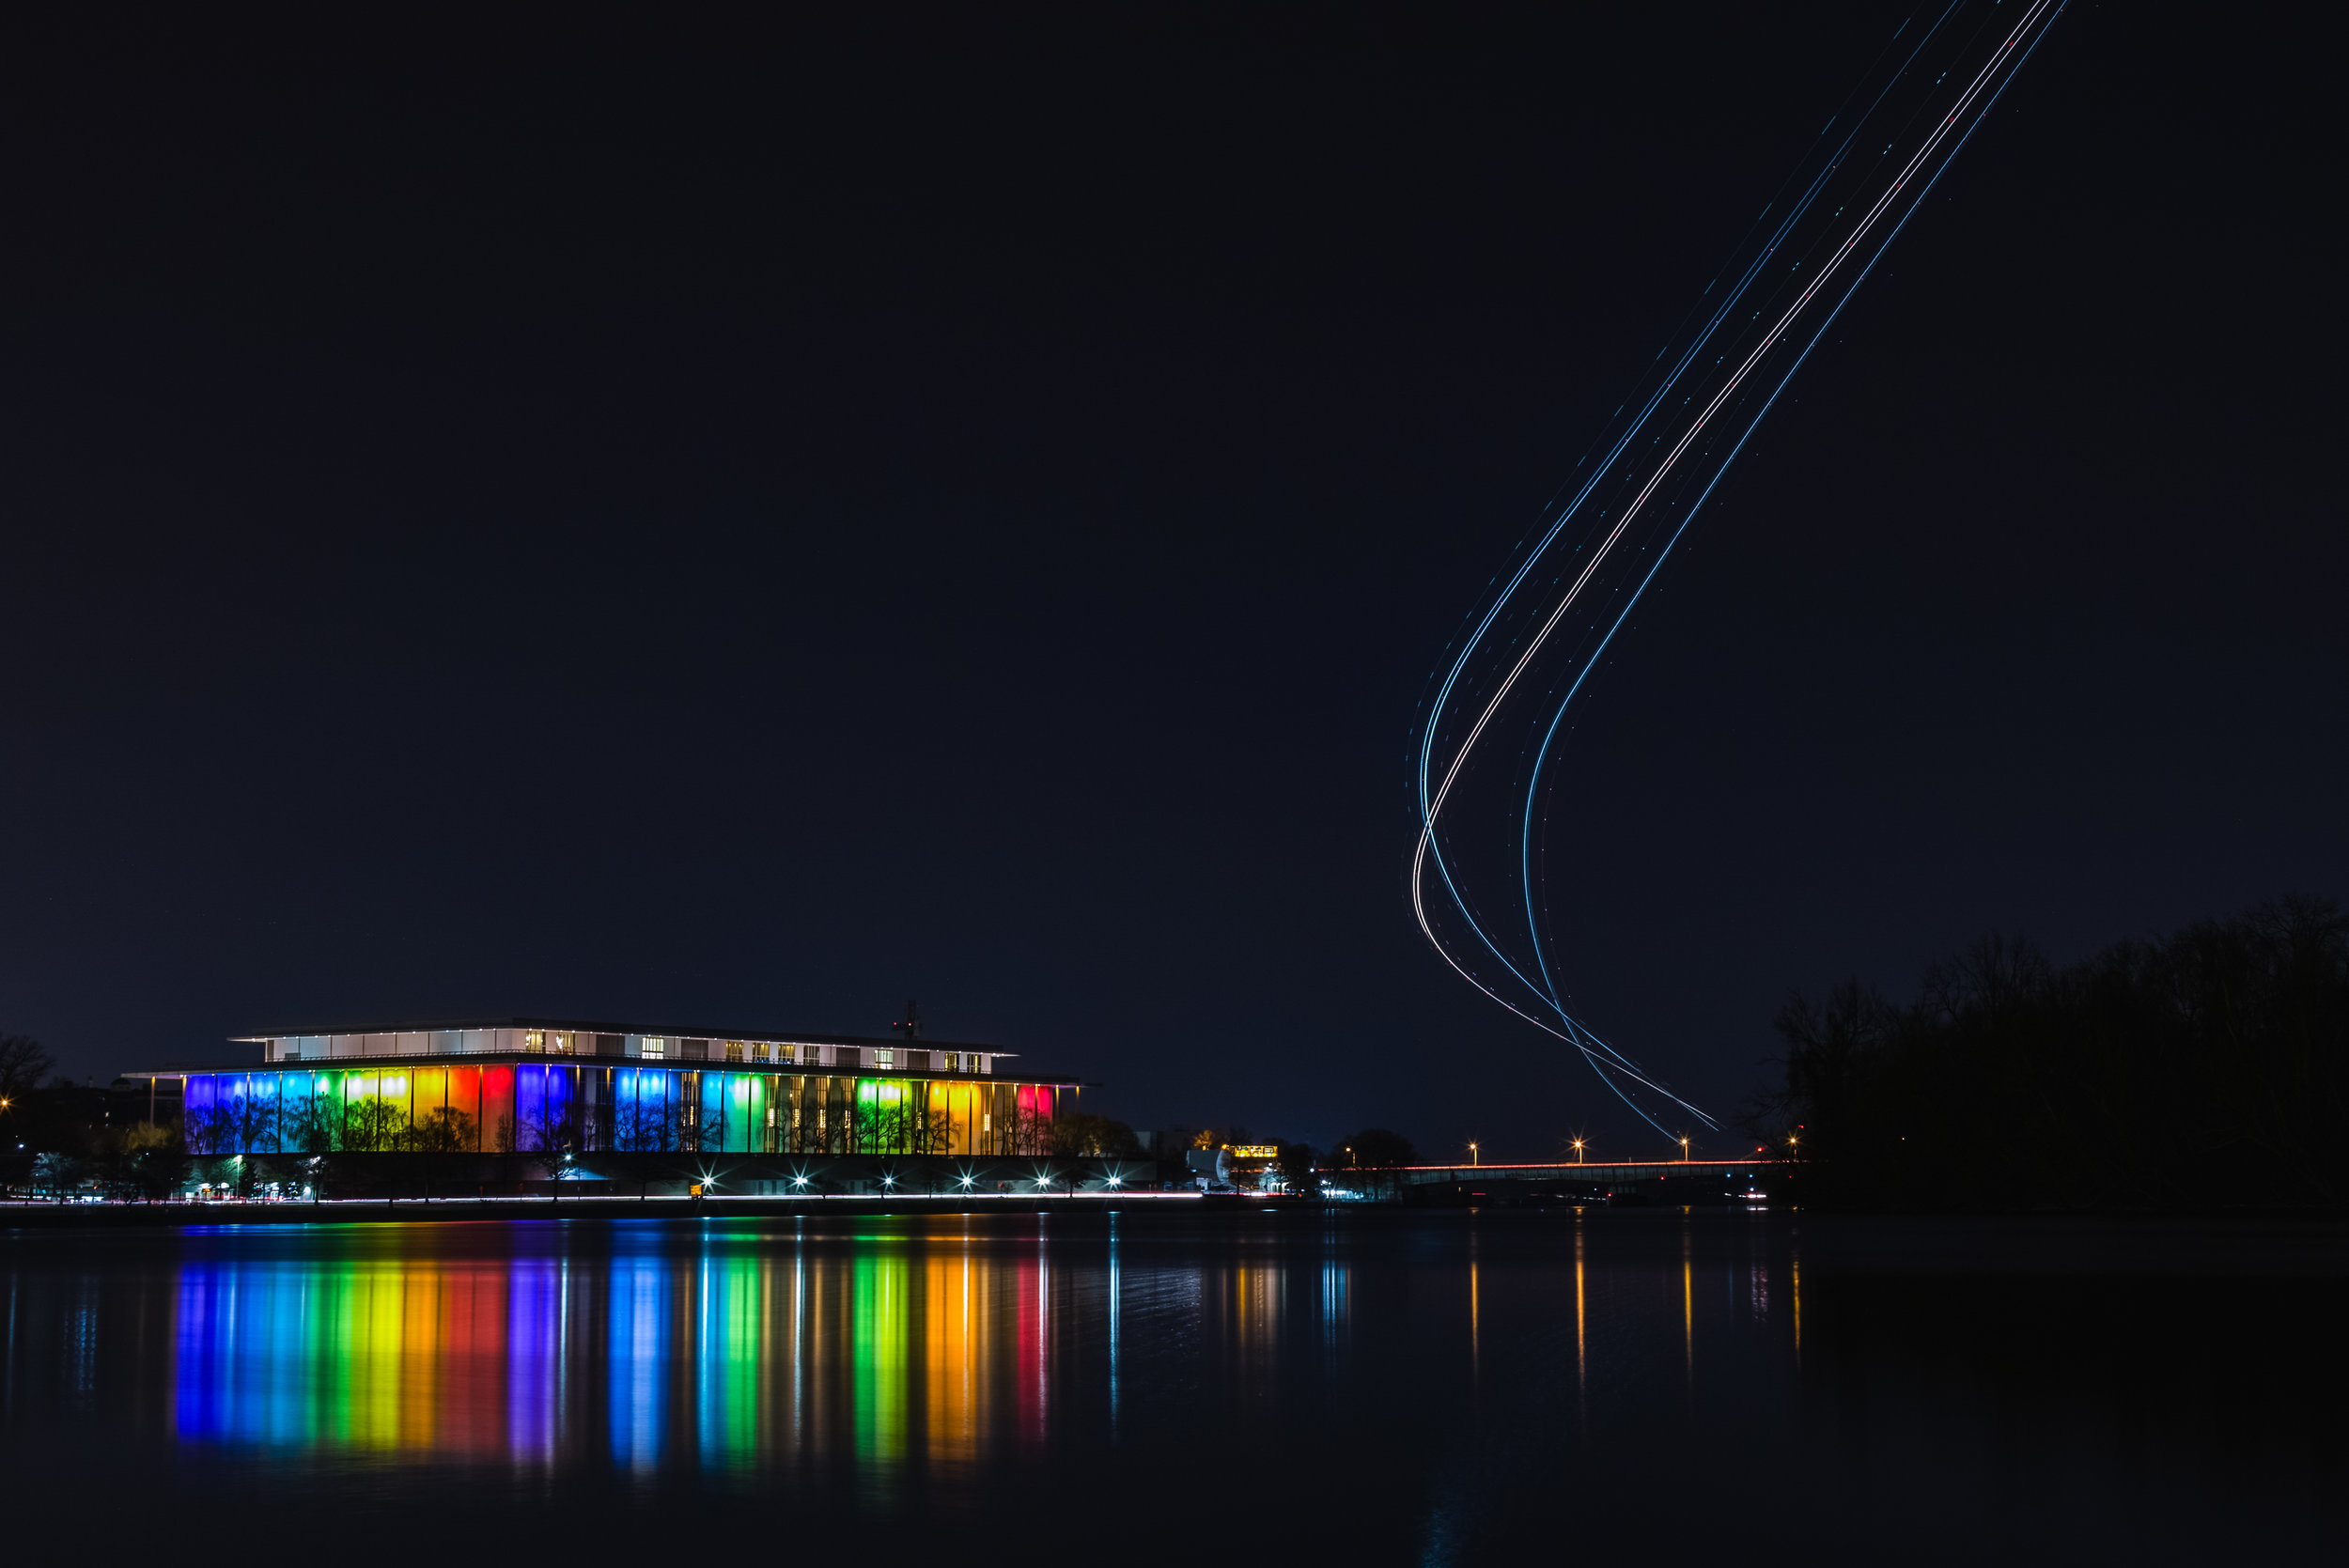 Flying Over The Rainbow. Washington, D.C. (Dec. 2018)